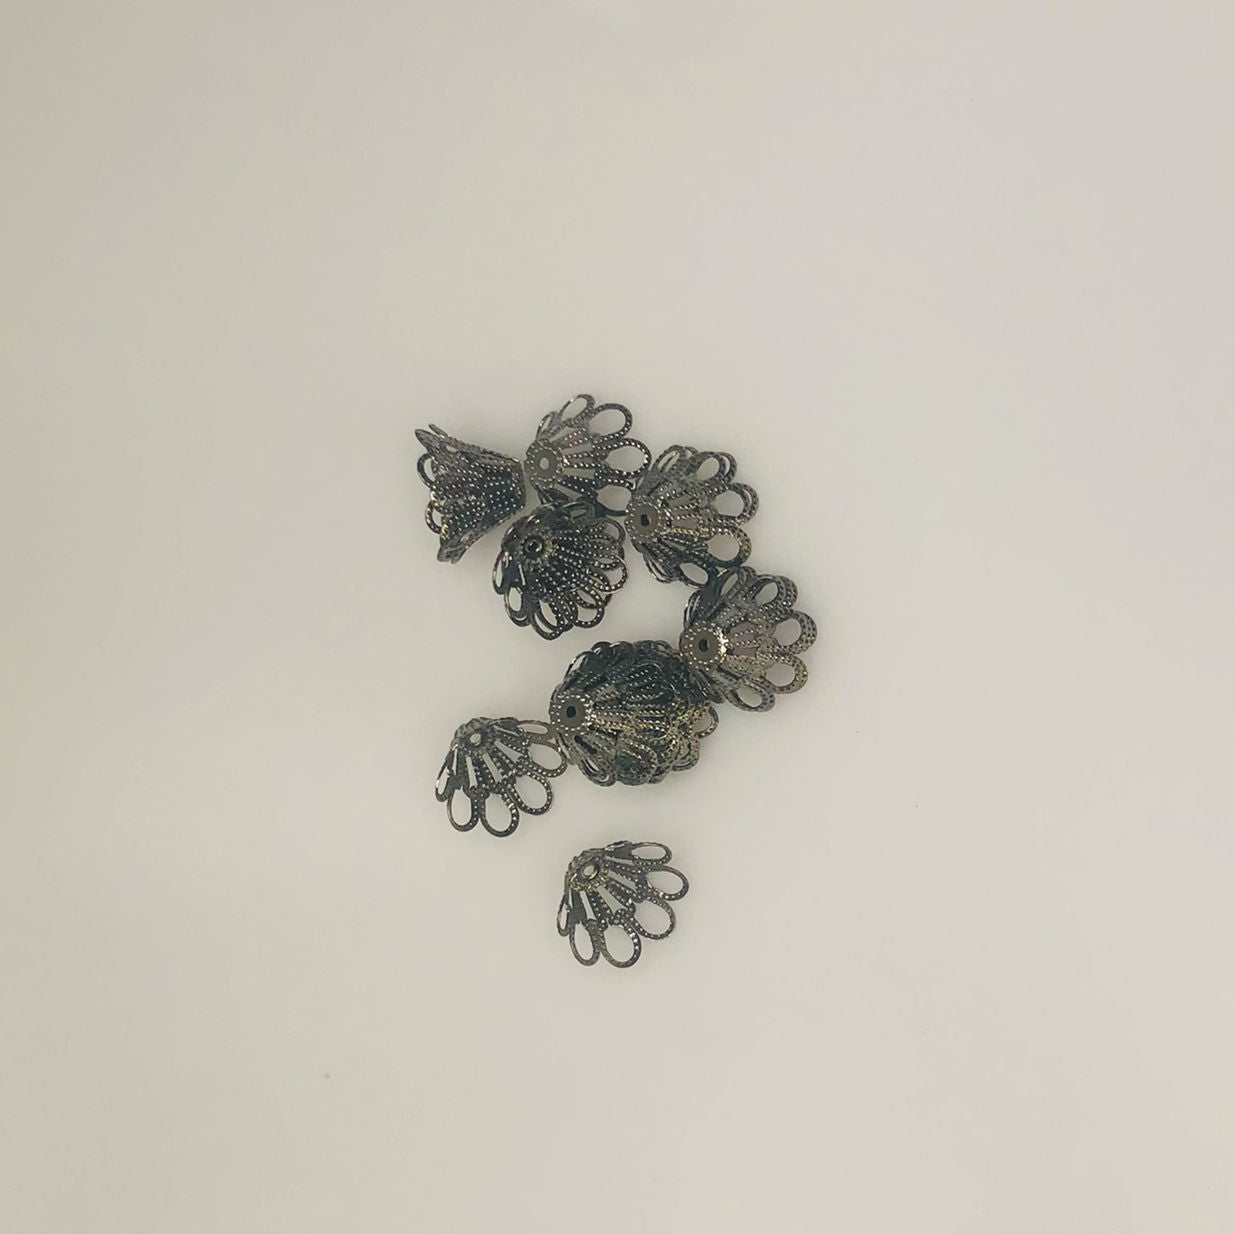 Fancy Basket Gunmetal Plated Brass Bead Caps, 14 x 8 mm, Fits 14-18 mm Beads - 2 Caps